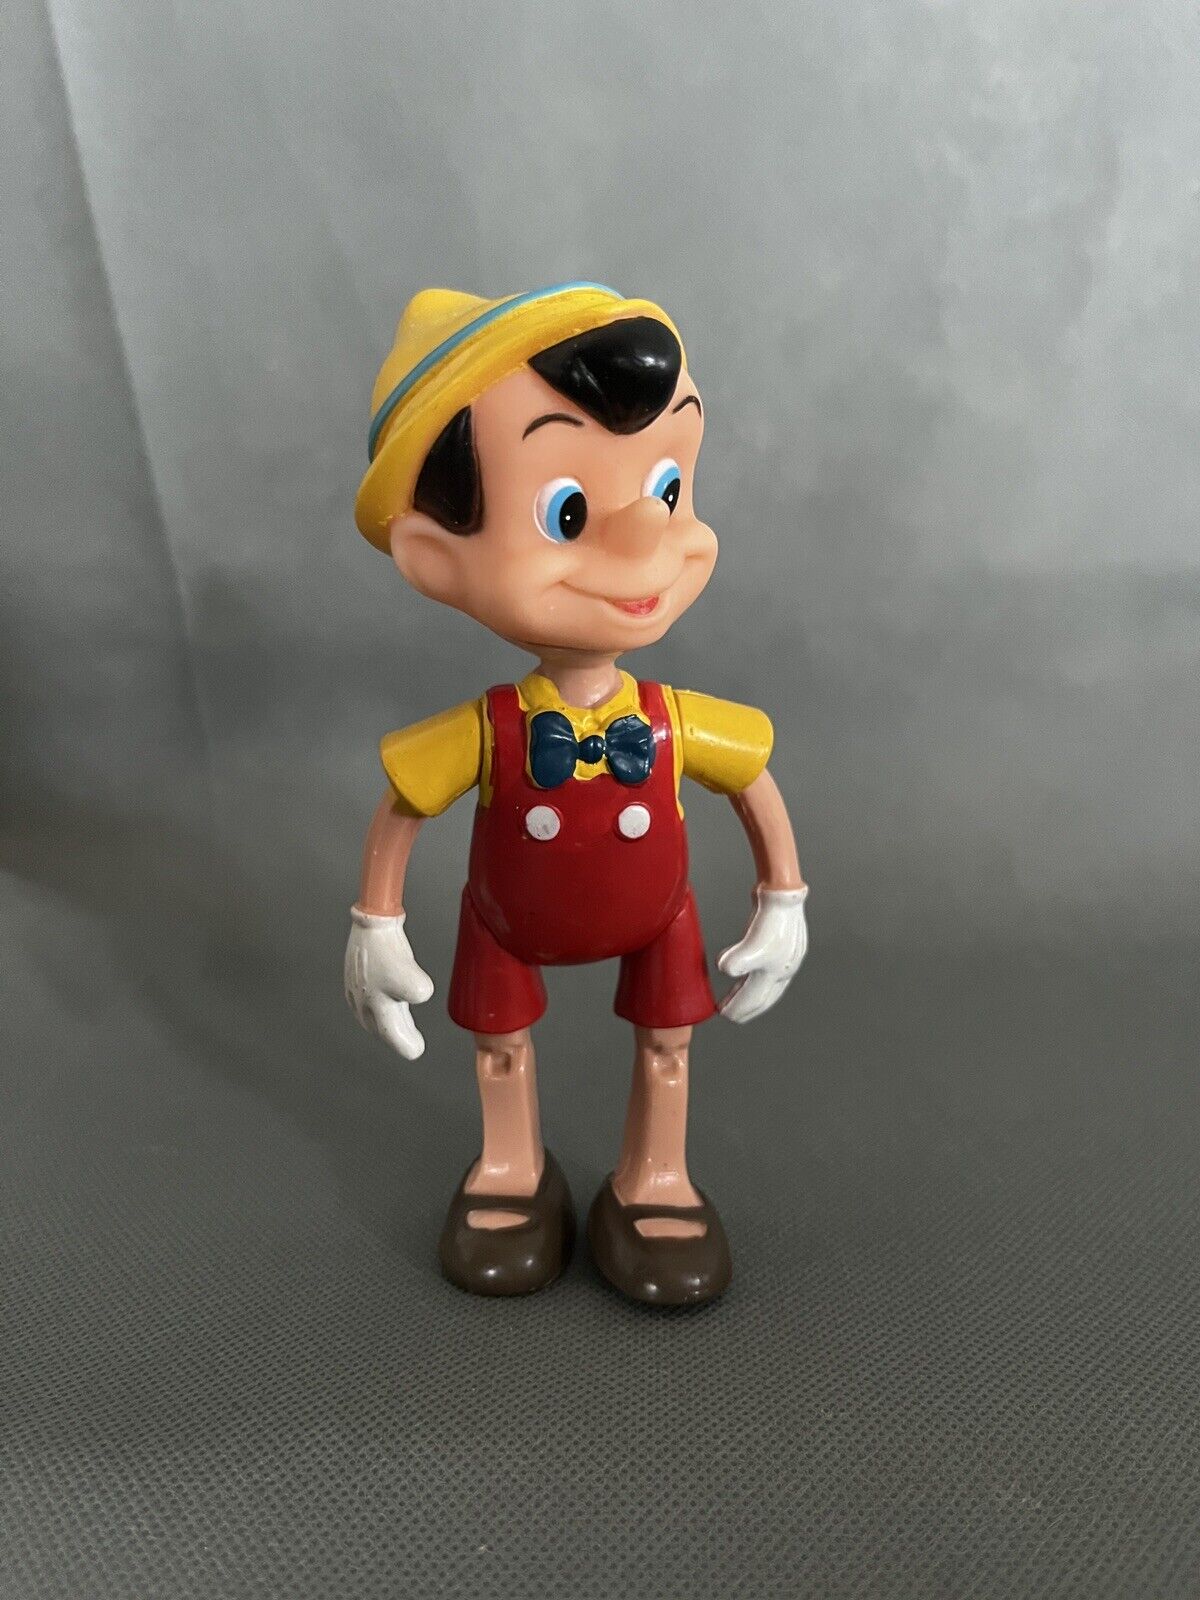 Pinocchio 5” Vintage Plastic Figure Figurine Movable Head, Arms & Legs